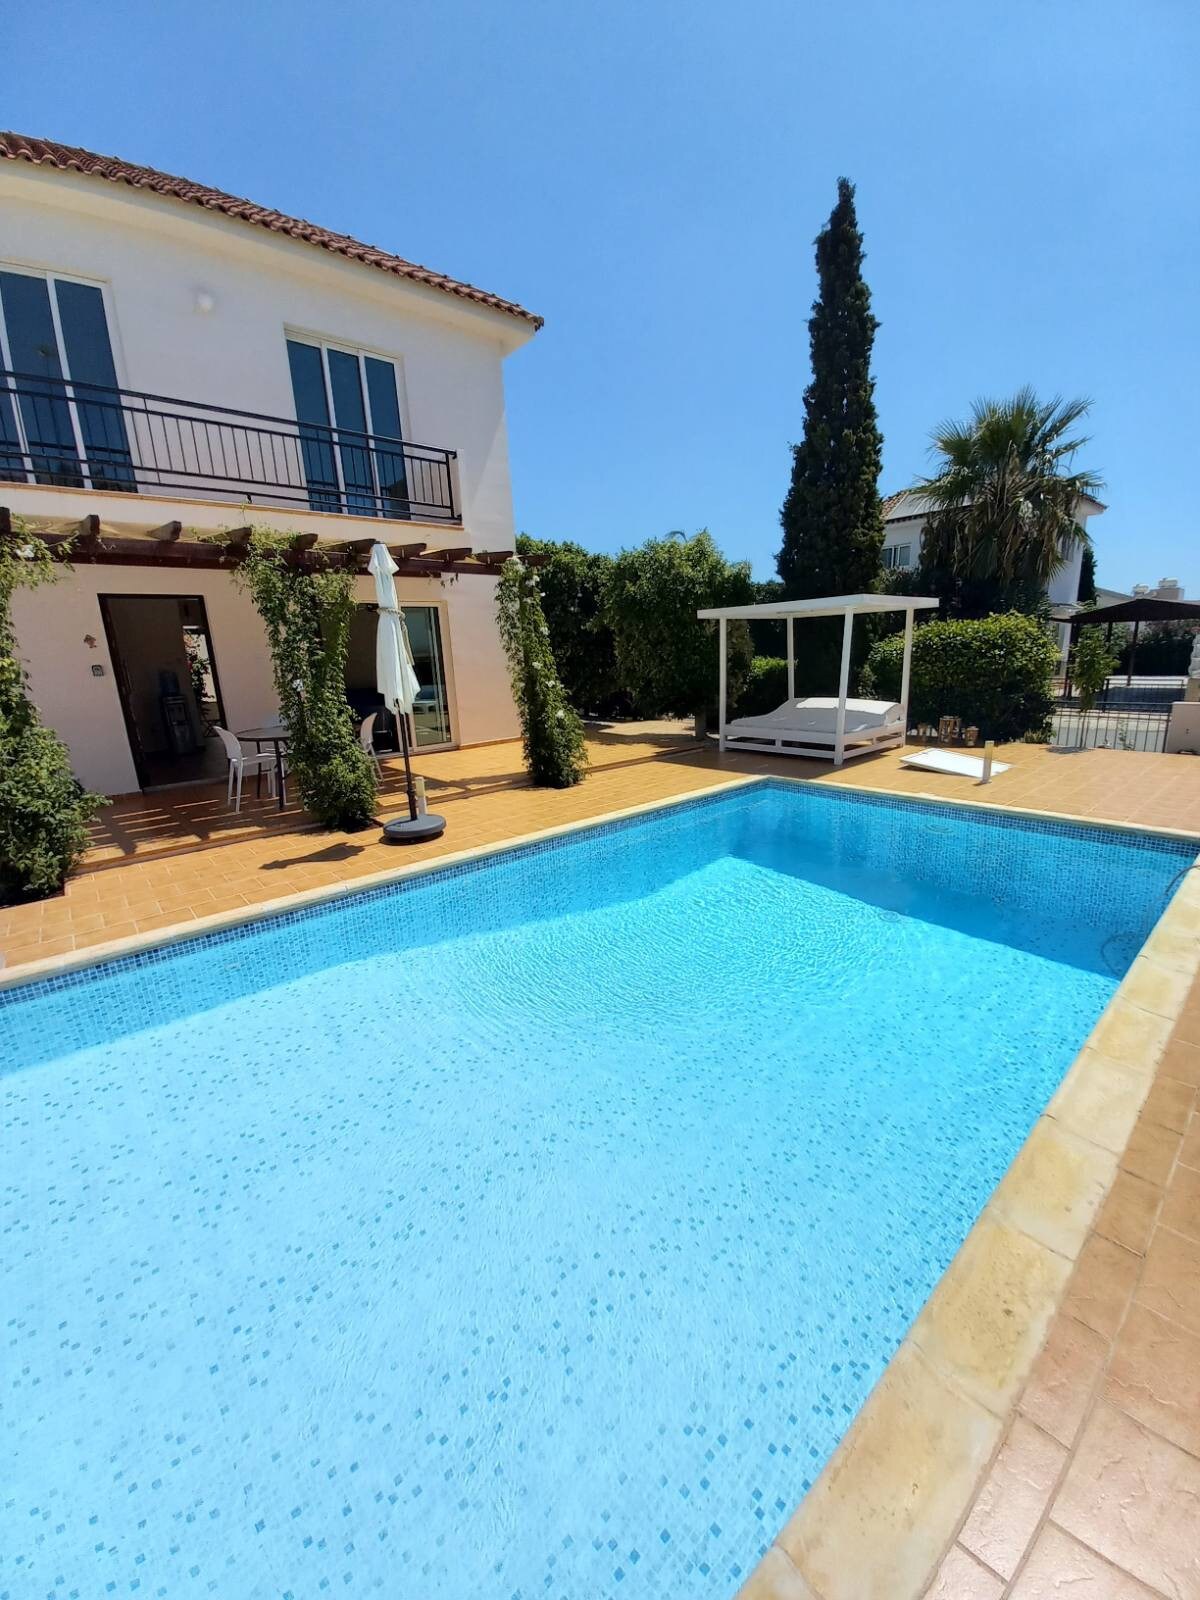 Summer Breeze - Cheerful 2 bedroom villa with pool